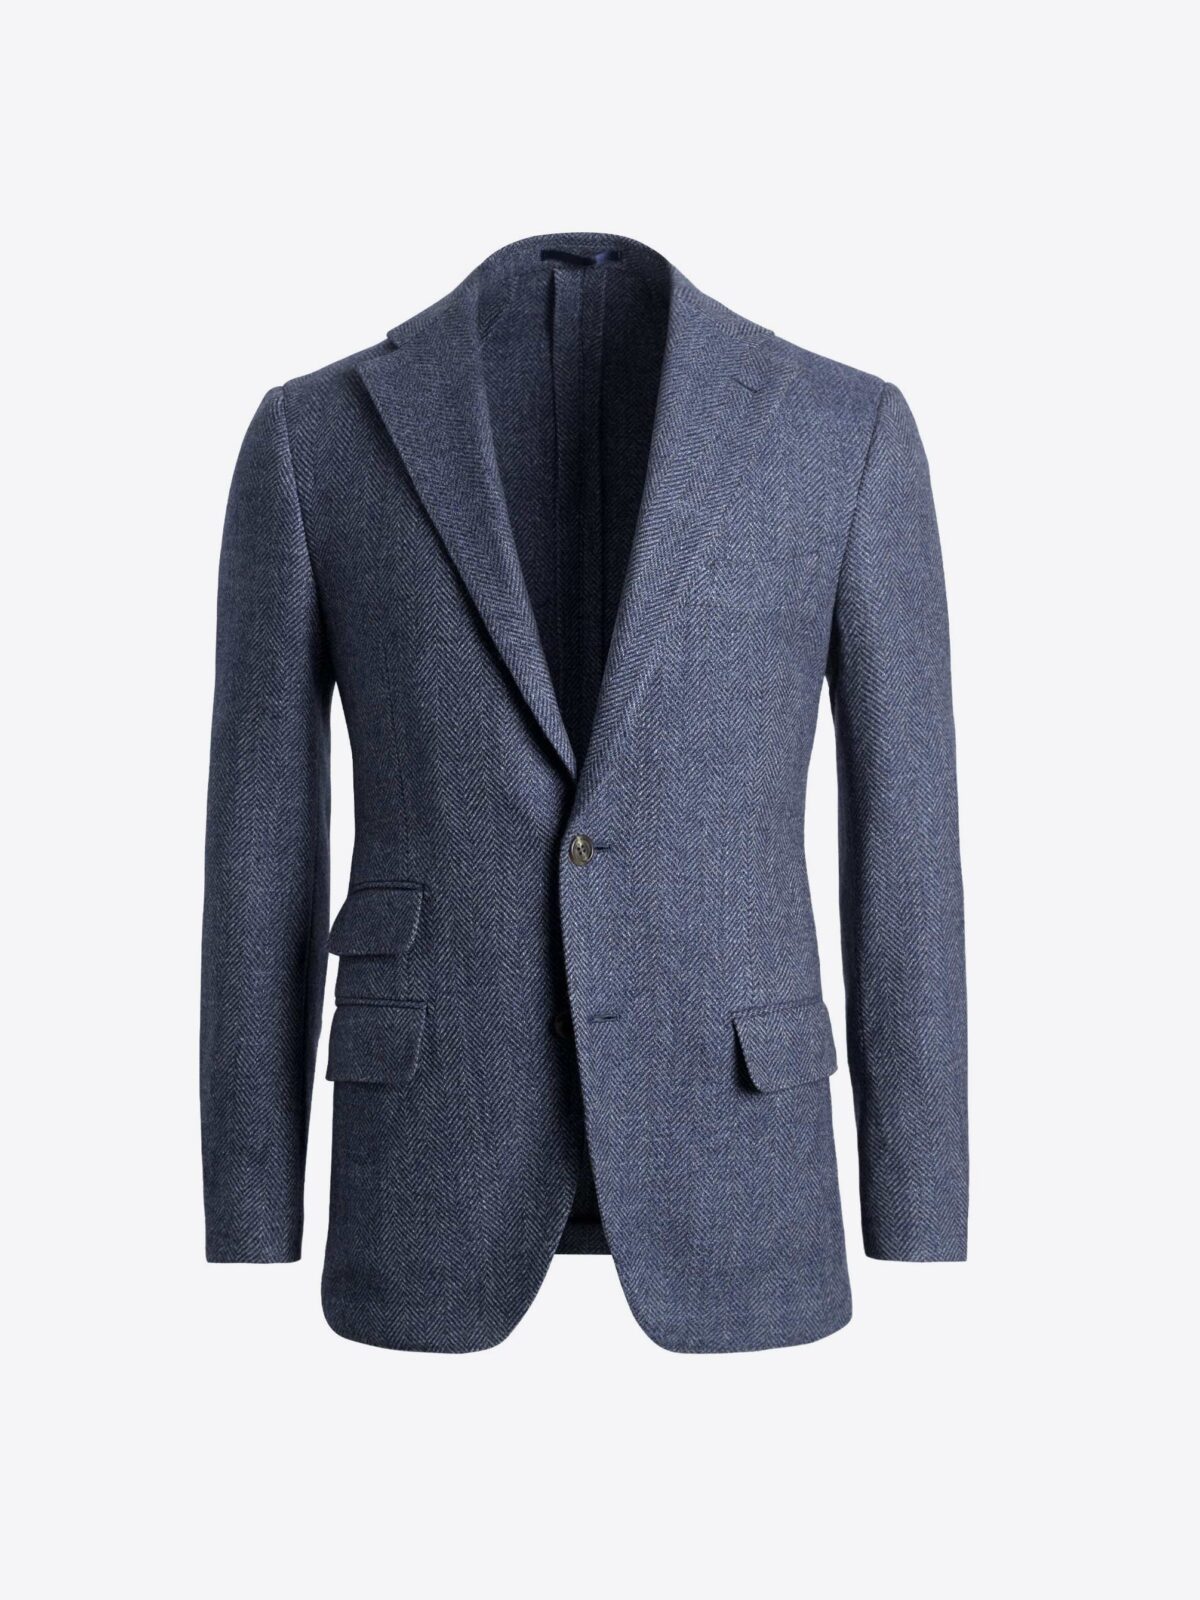 VBC Faded Blue Herringbone Bedford Jacket - Custom Fit Tailored